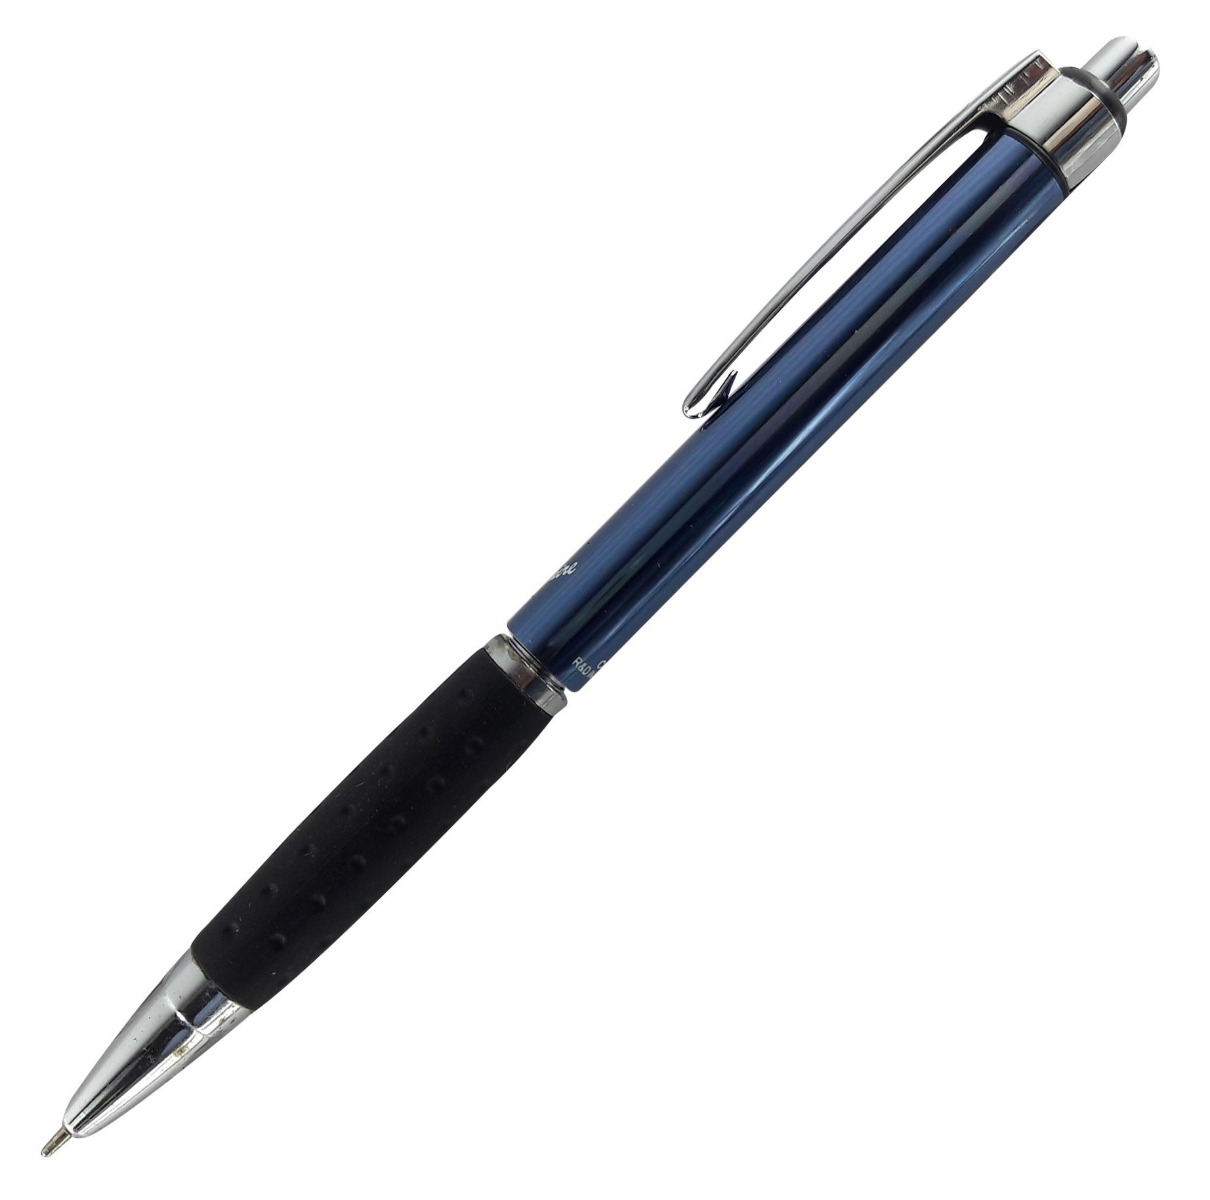 Cello Model No: 11879 Sapphire Blue Color Body Click Type Ball Pen